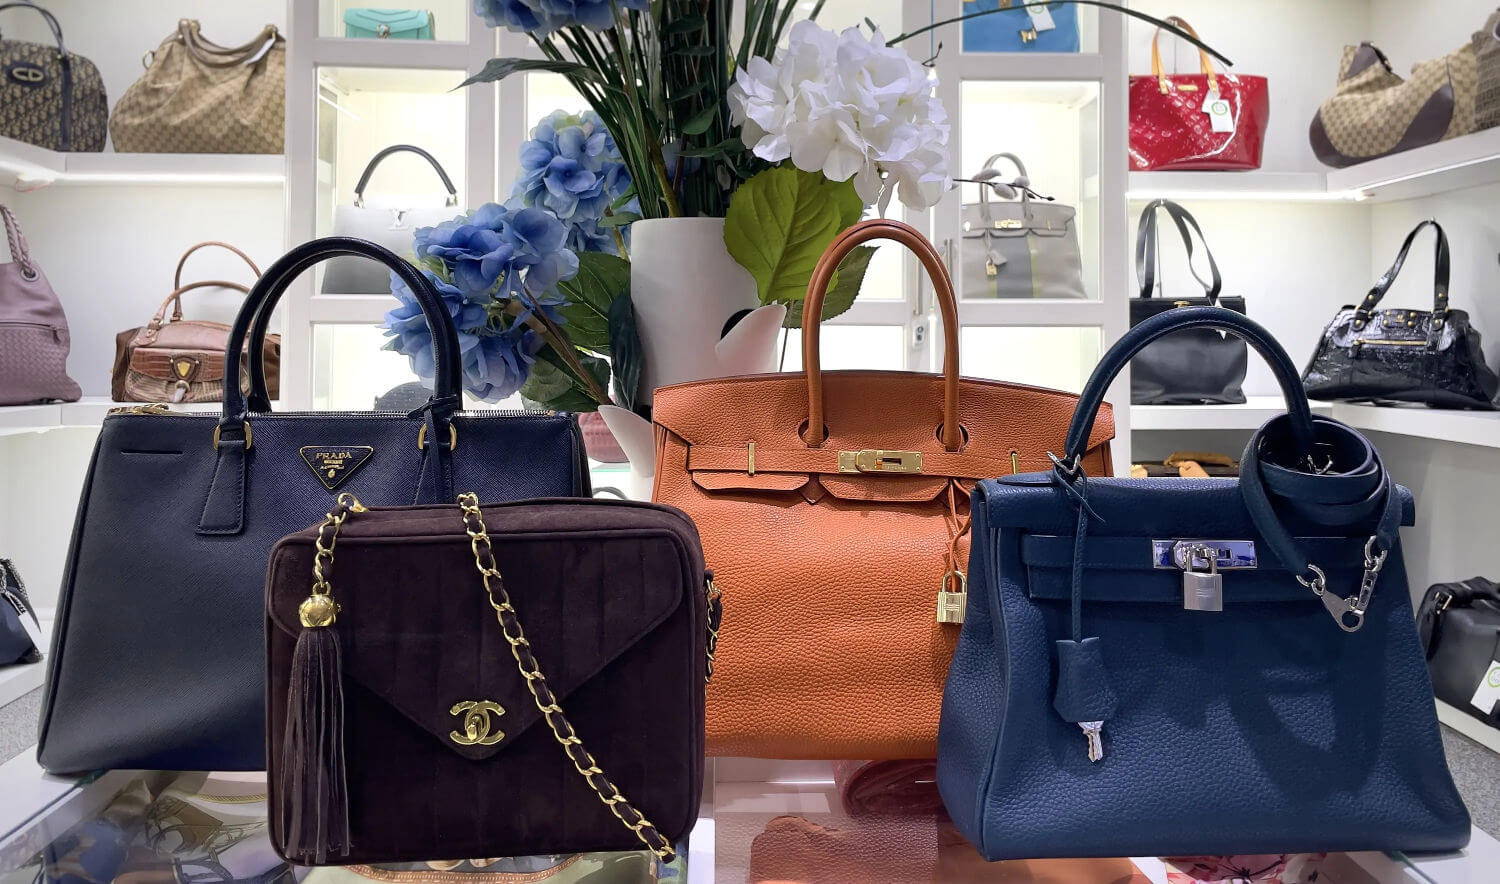 Asset or accessory? Luxury handbags spark growing interest